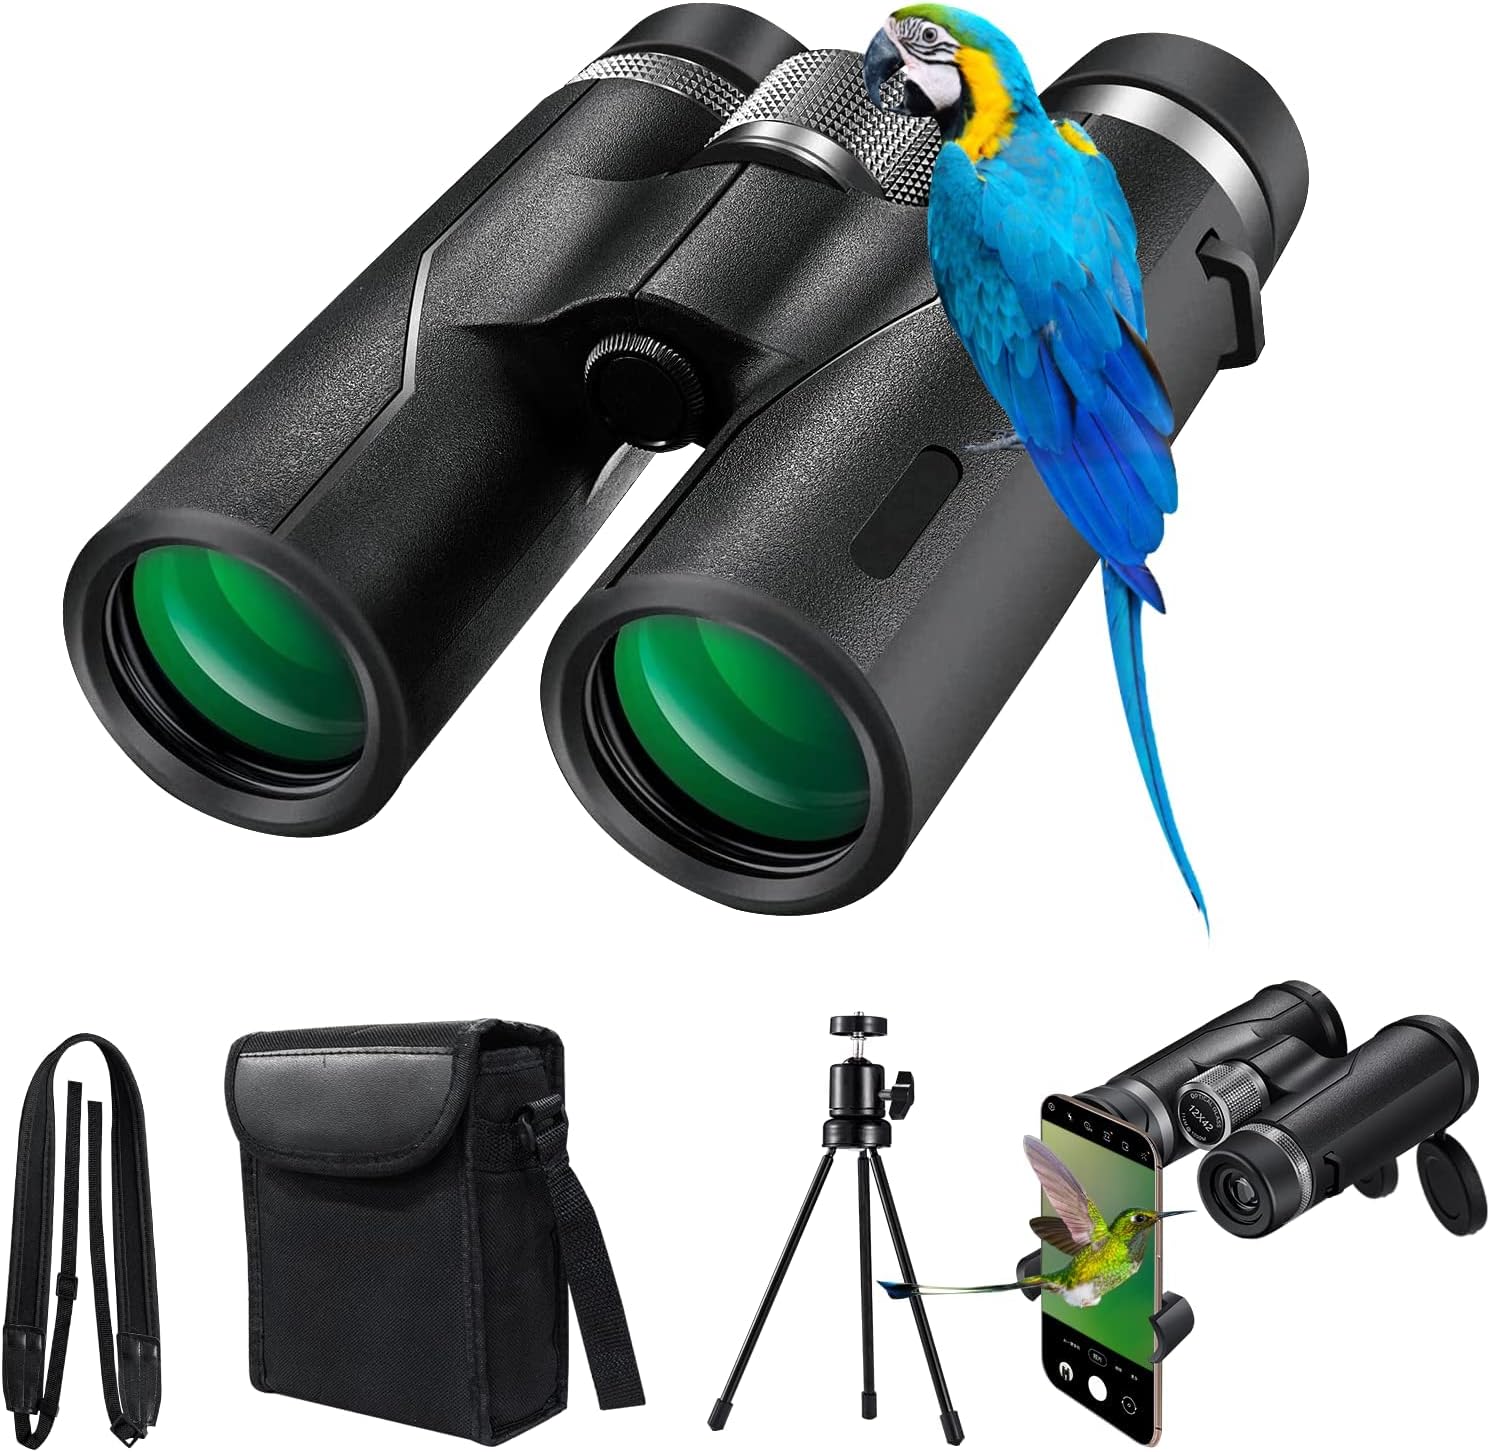 11.ICFPWR Binoculars